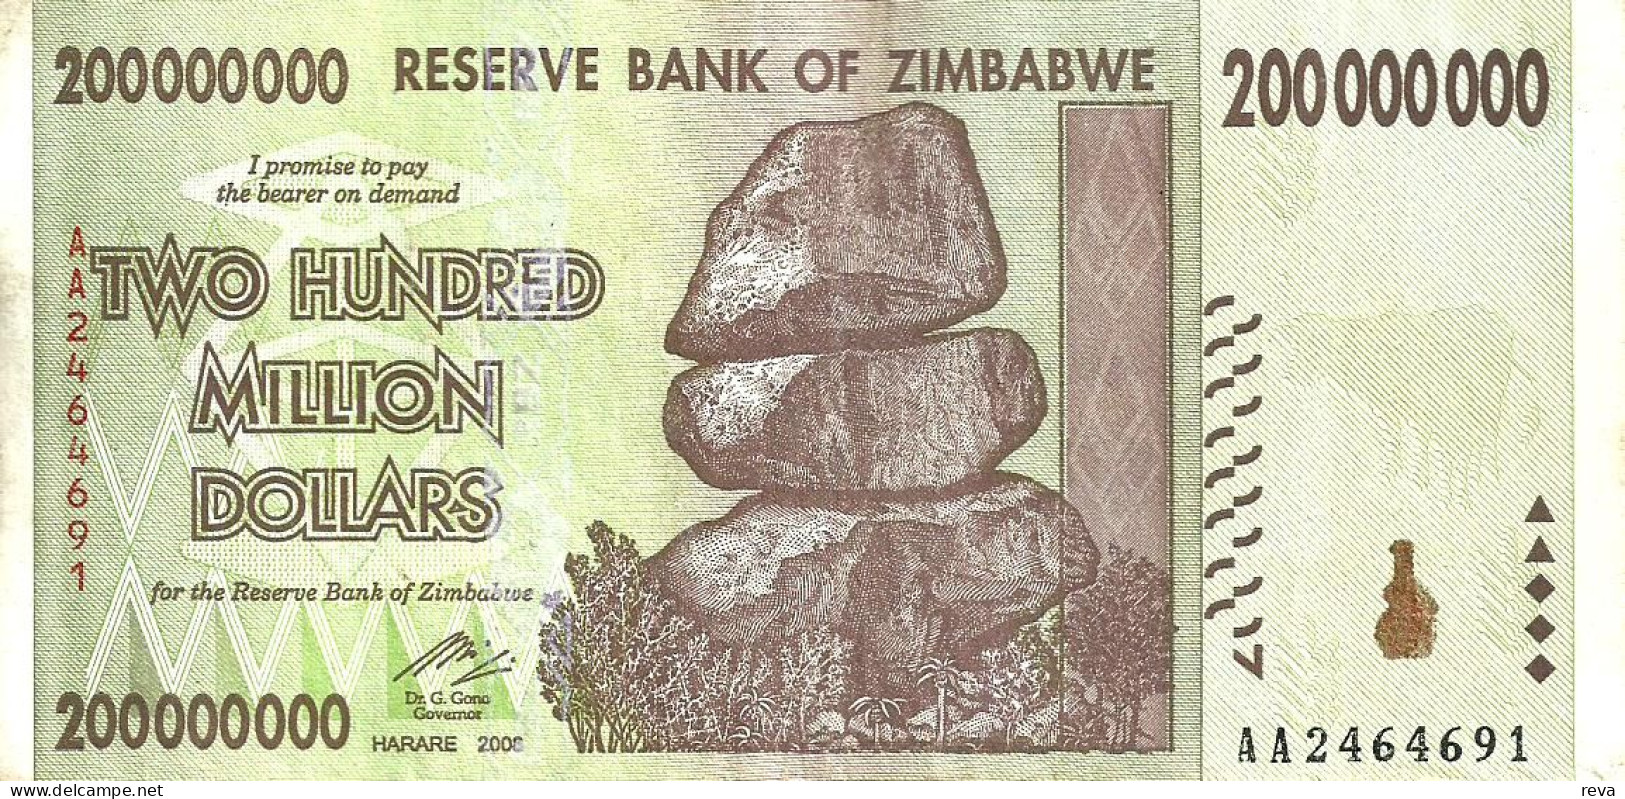 ZIMBABWE $200 MILLION BROWN ROCKS FRONT BUILDING BACK DATED 2008 VF READ DESCRIPTION CAREFULLY !!! - Simbabwe